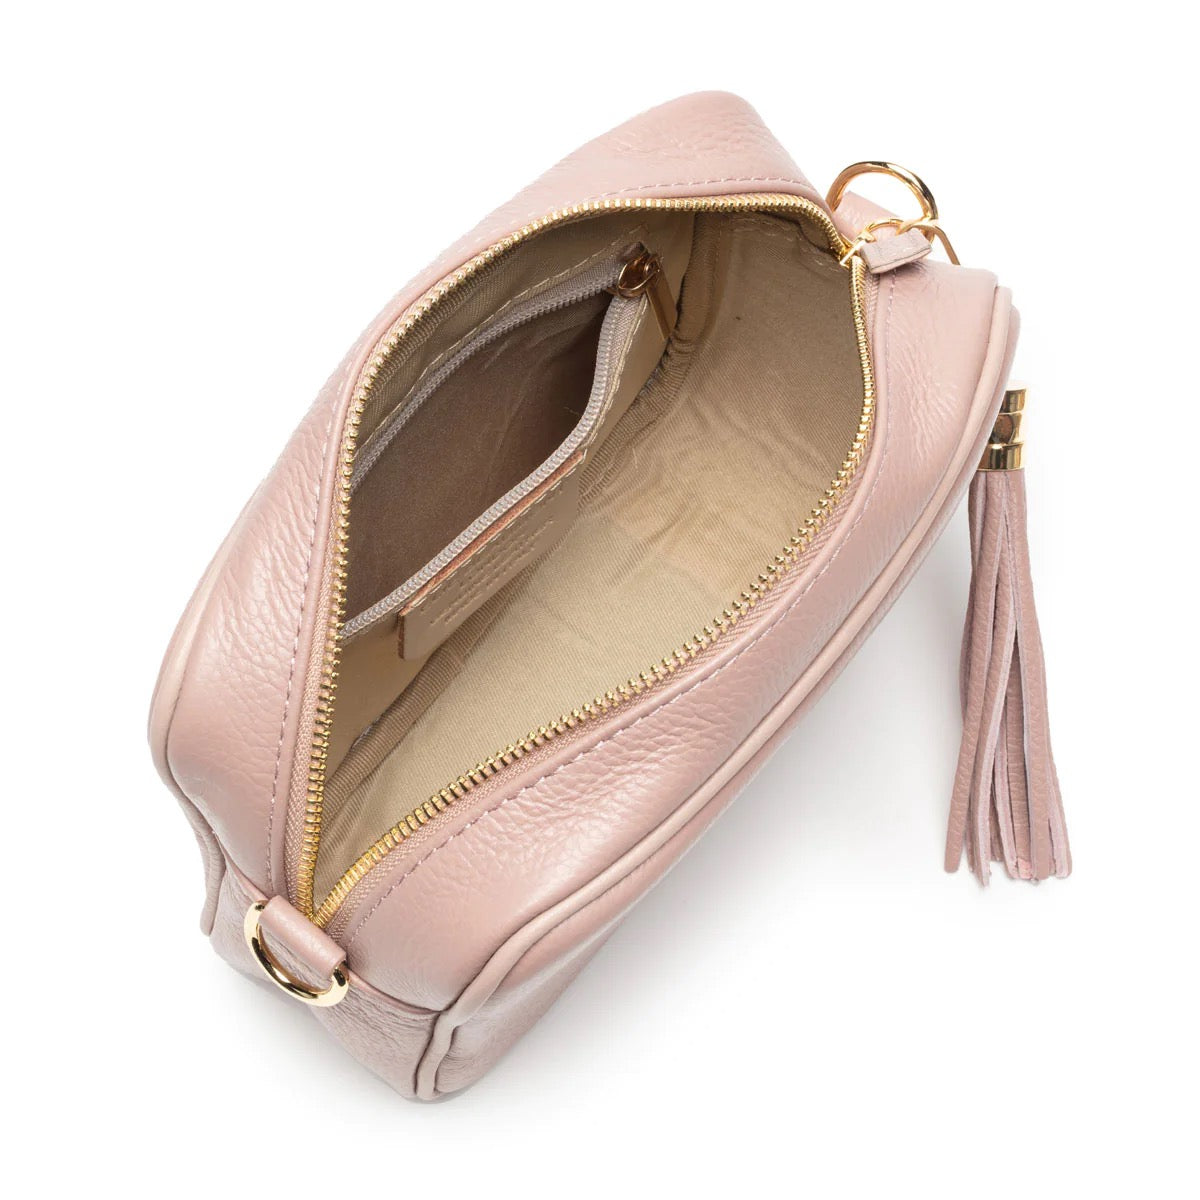 Elie Beaumont Designer Leather Crossbody Bag - Blush Pink (GOLD Fittings)